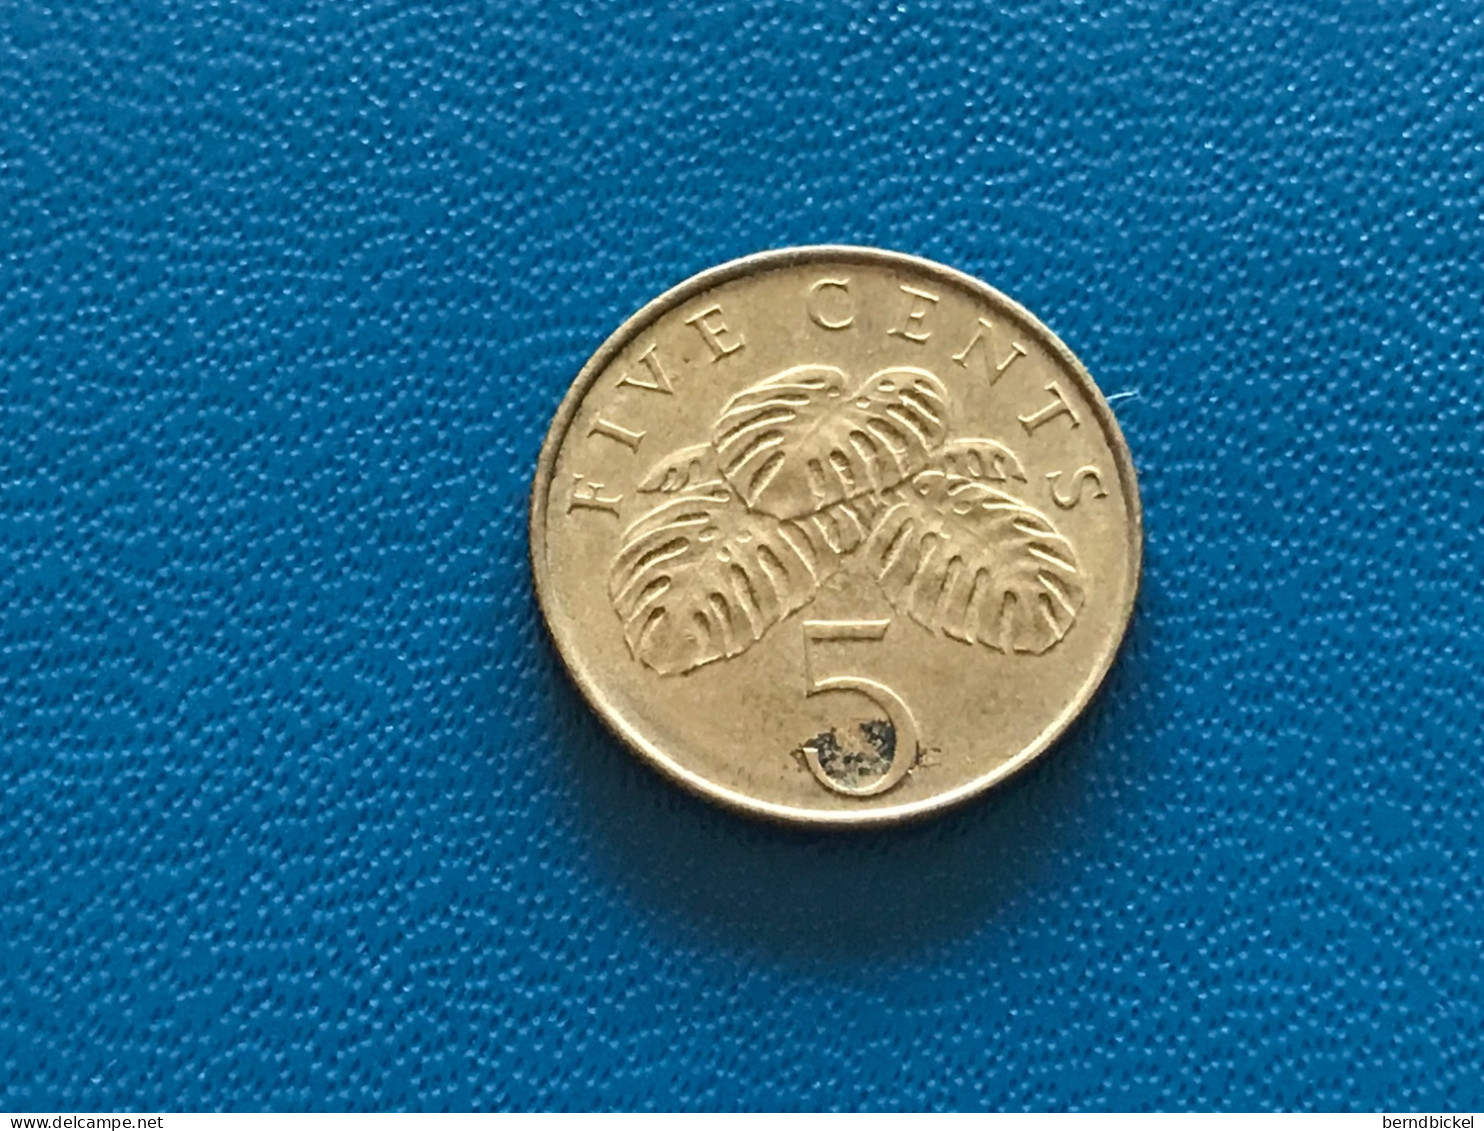 Münzen Münze Umlaufmünze Singapur 5 Cents 1997 - Singapur